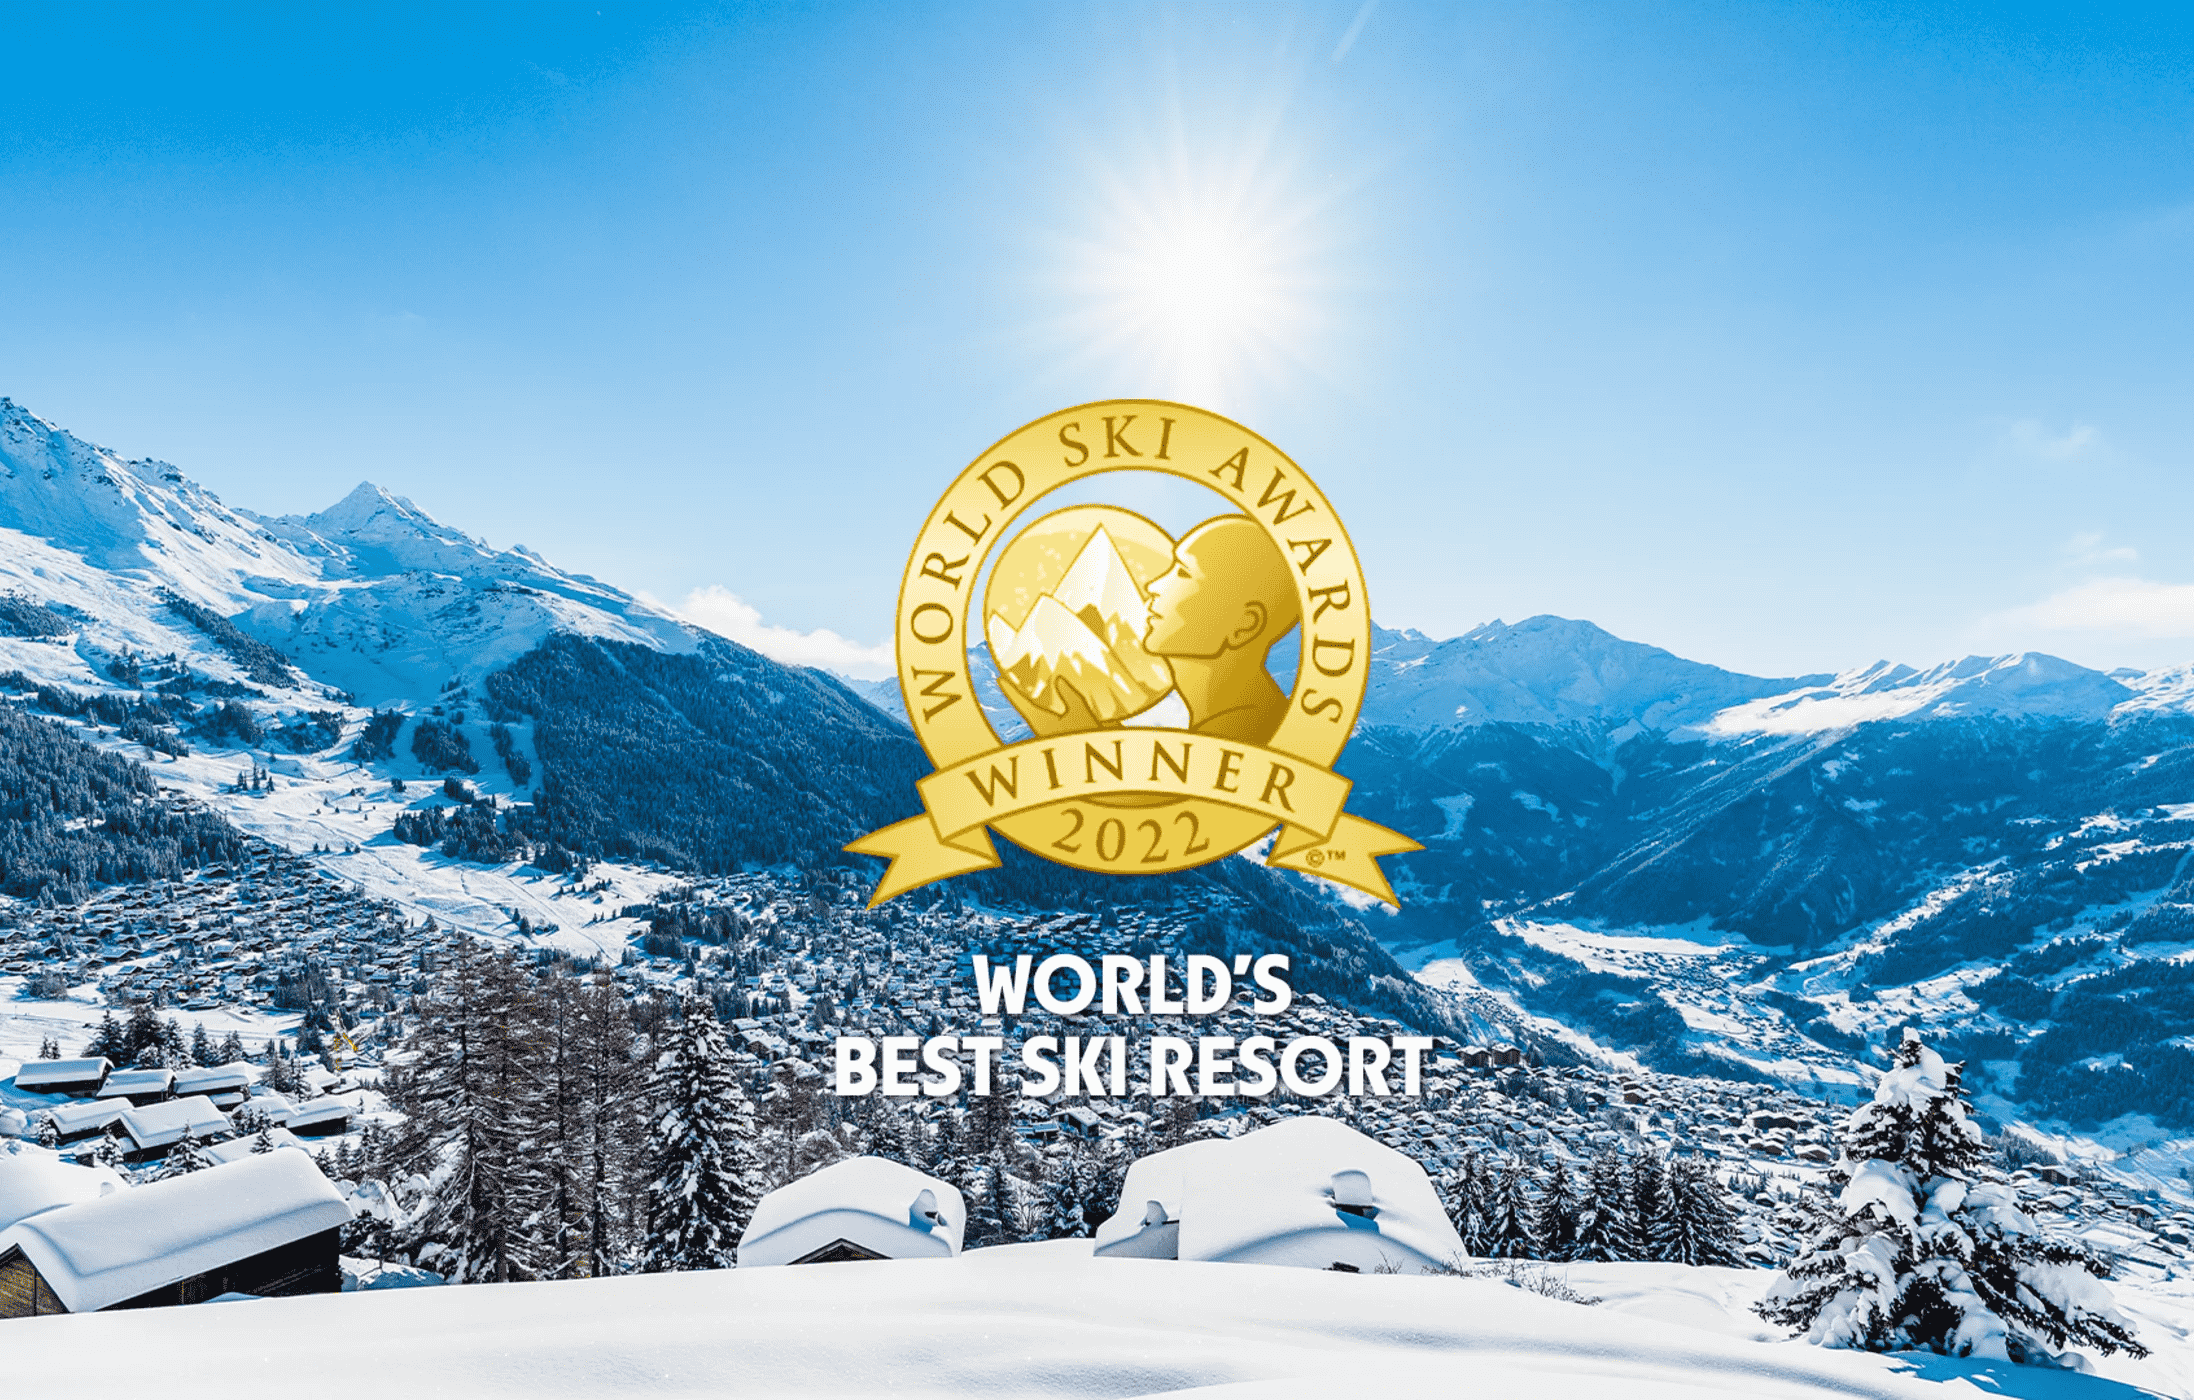 Verbier - The world's best rated ski resort